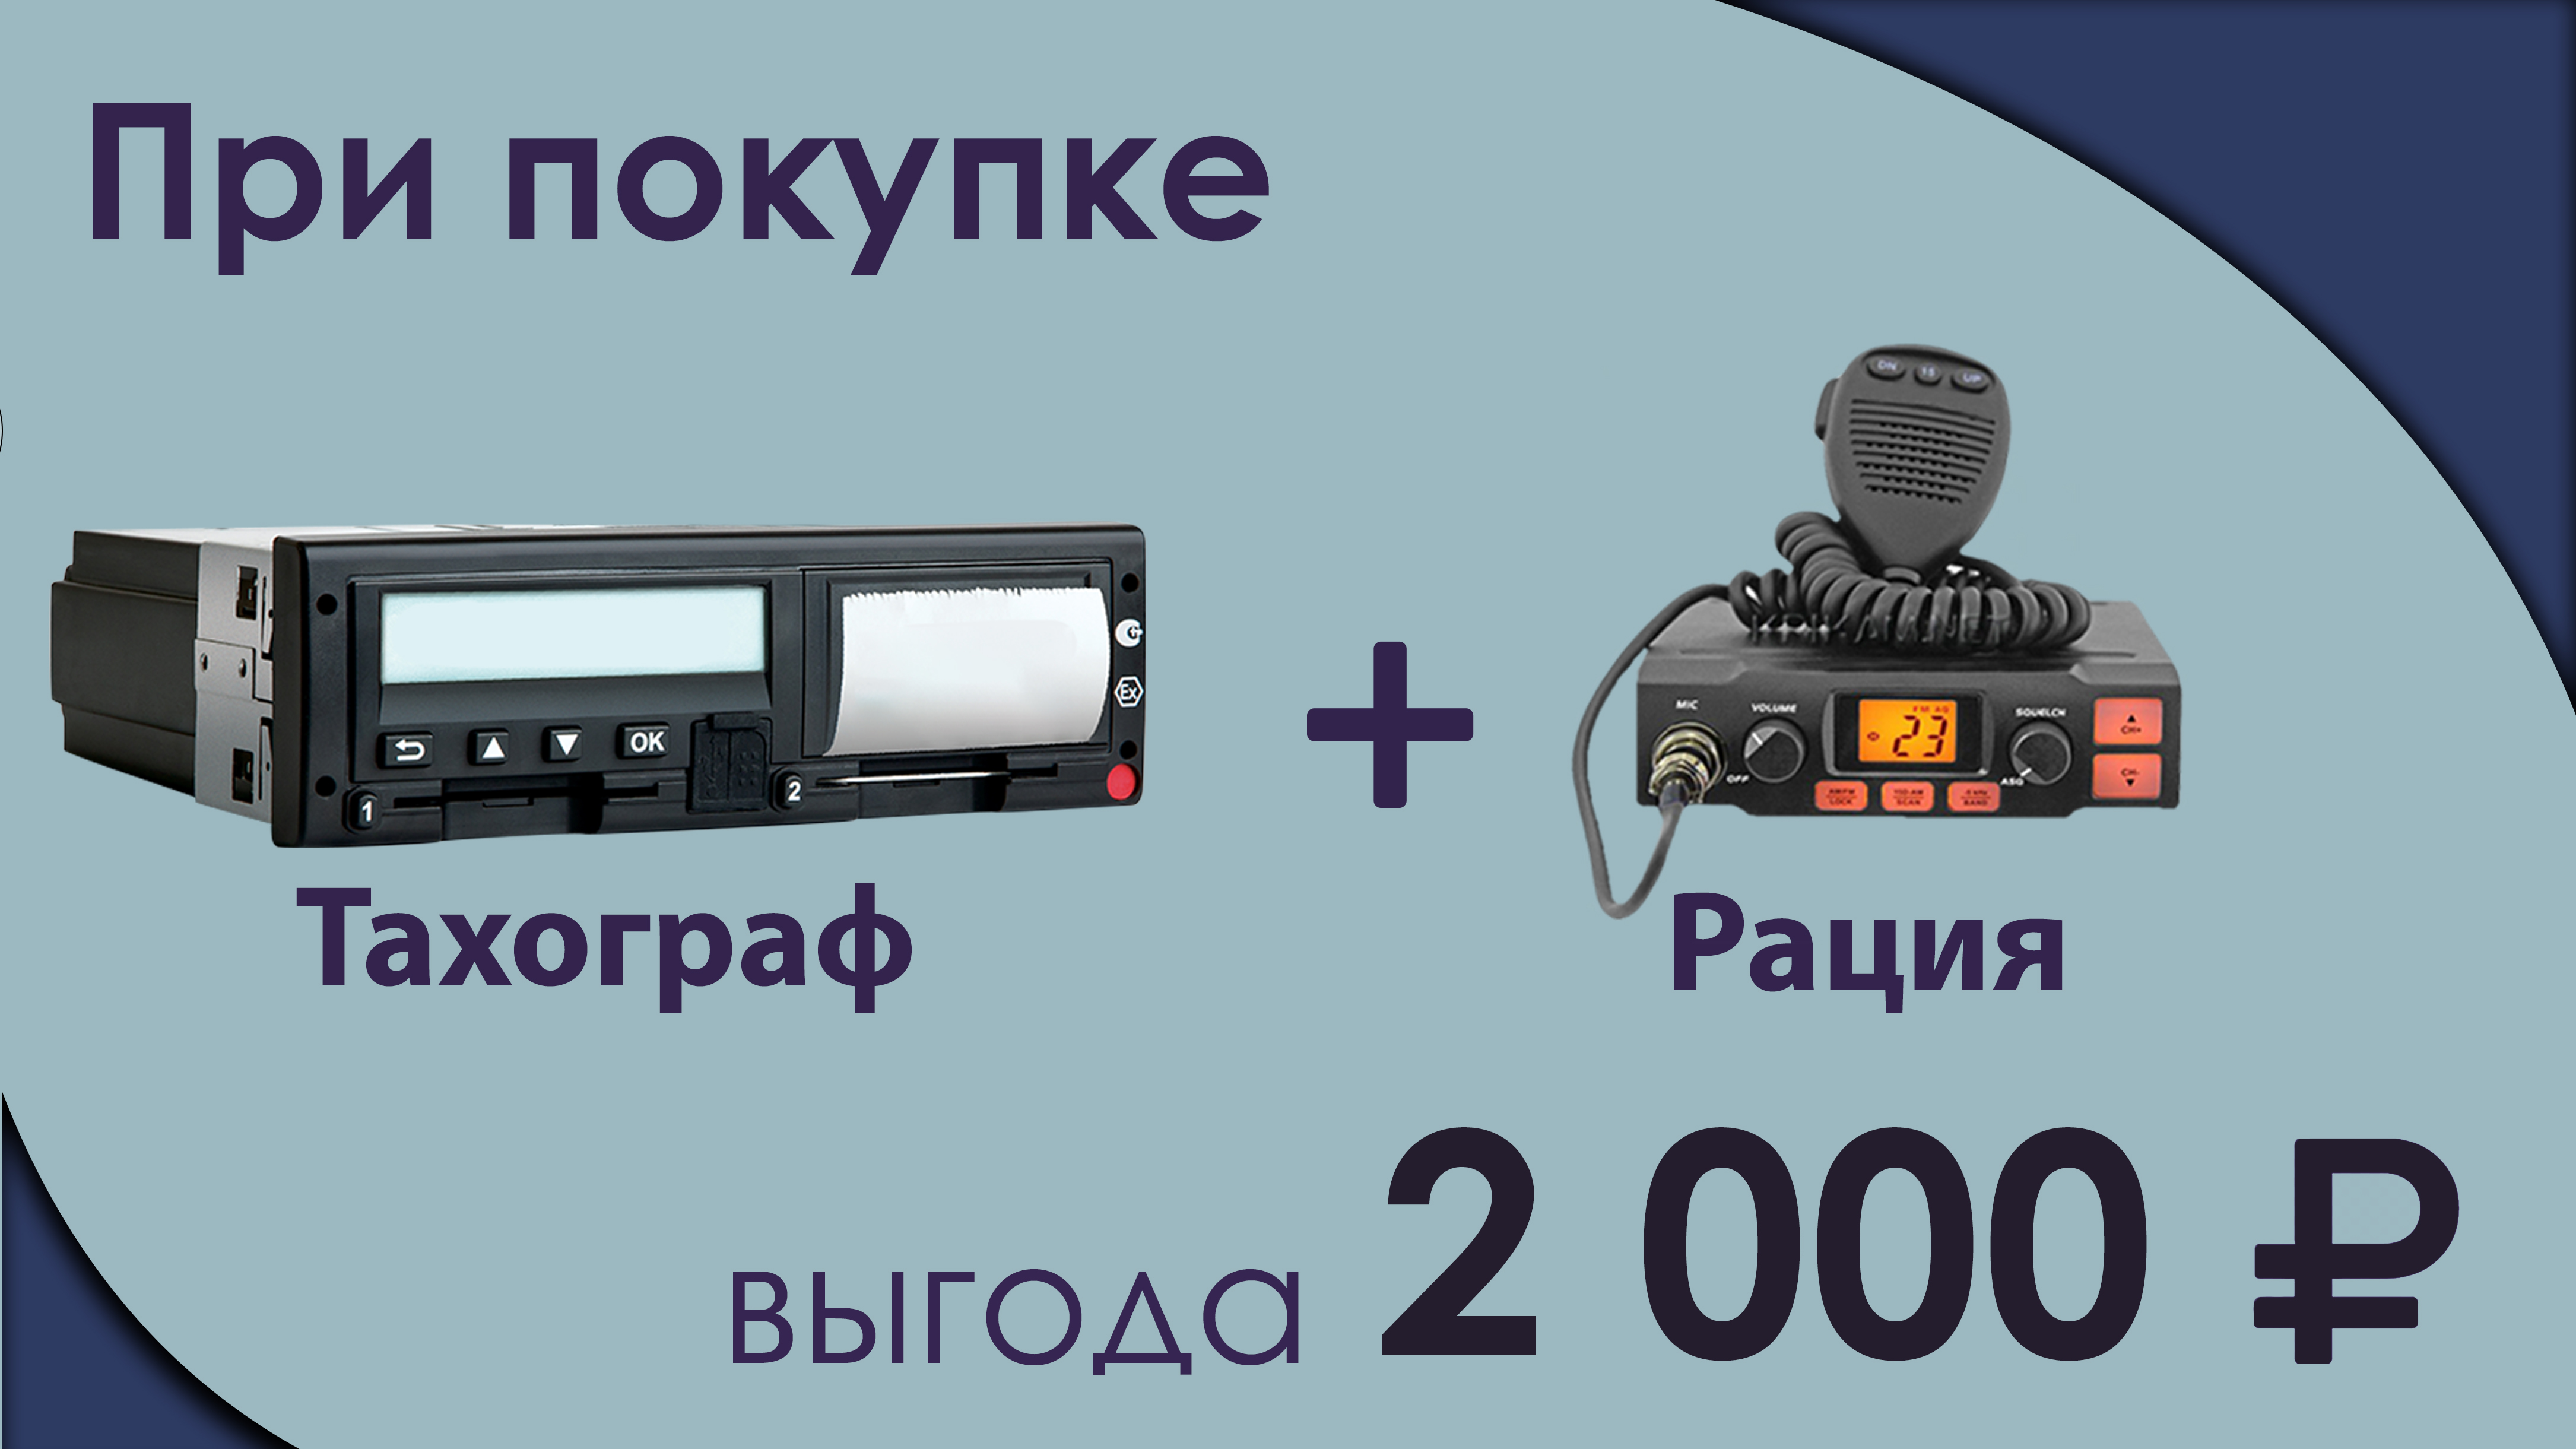 Комплект: тахограф + рация = выгода 2000 руб